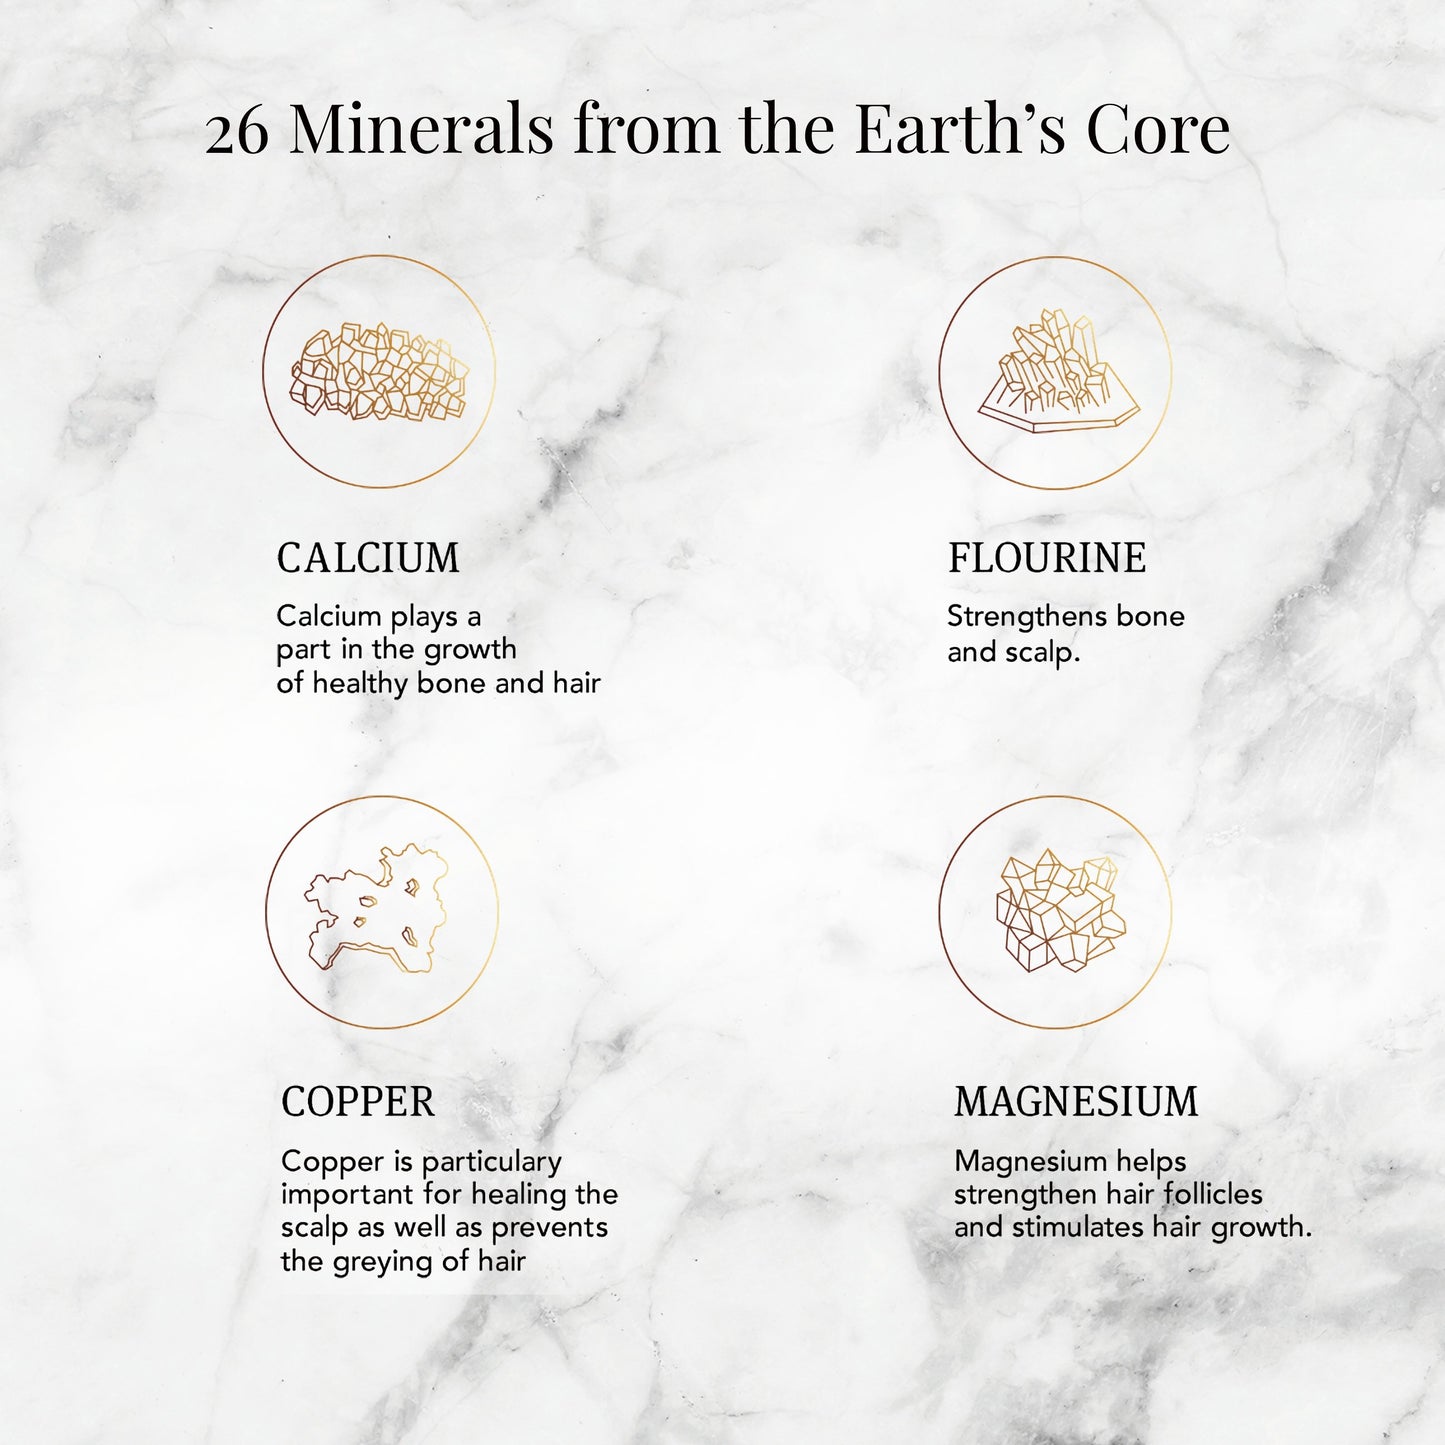 Calcium, Fluorine, Copper and Magnesium minerals are found in Saphira products